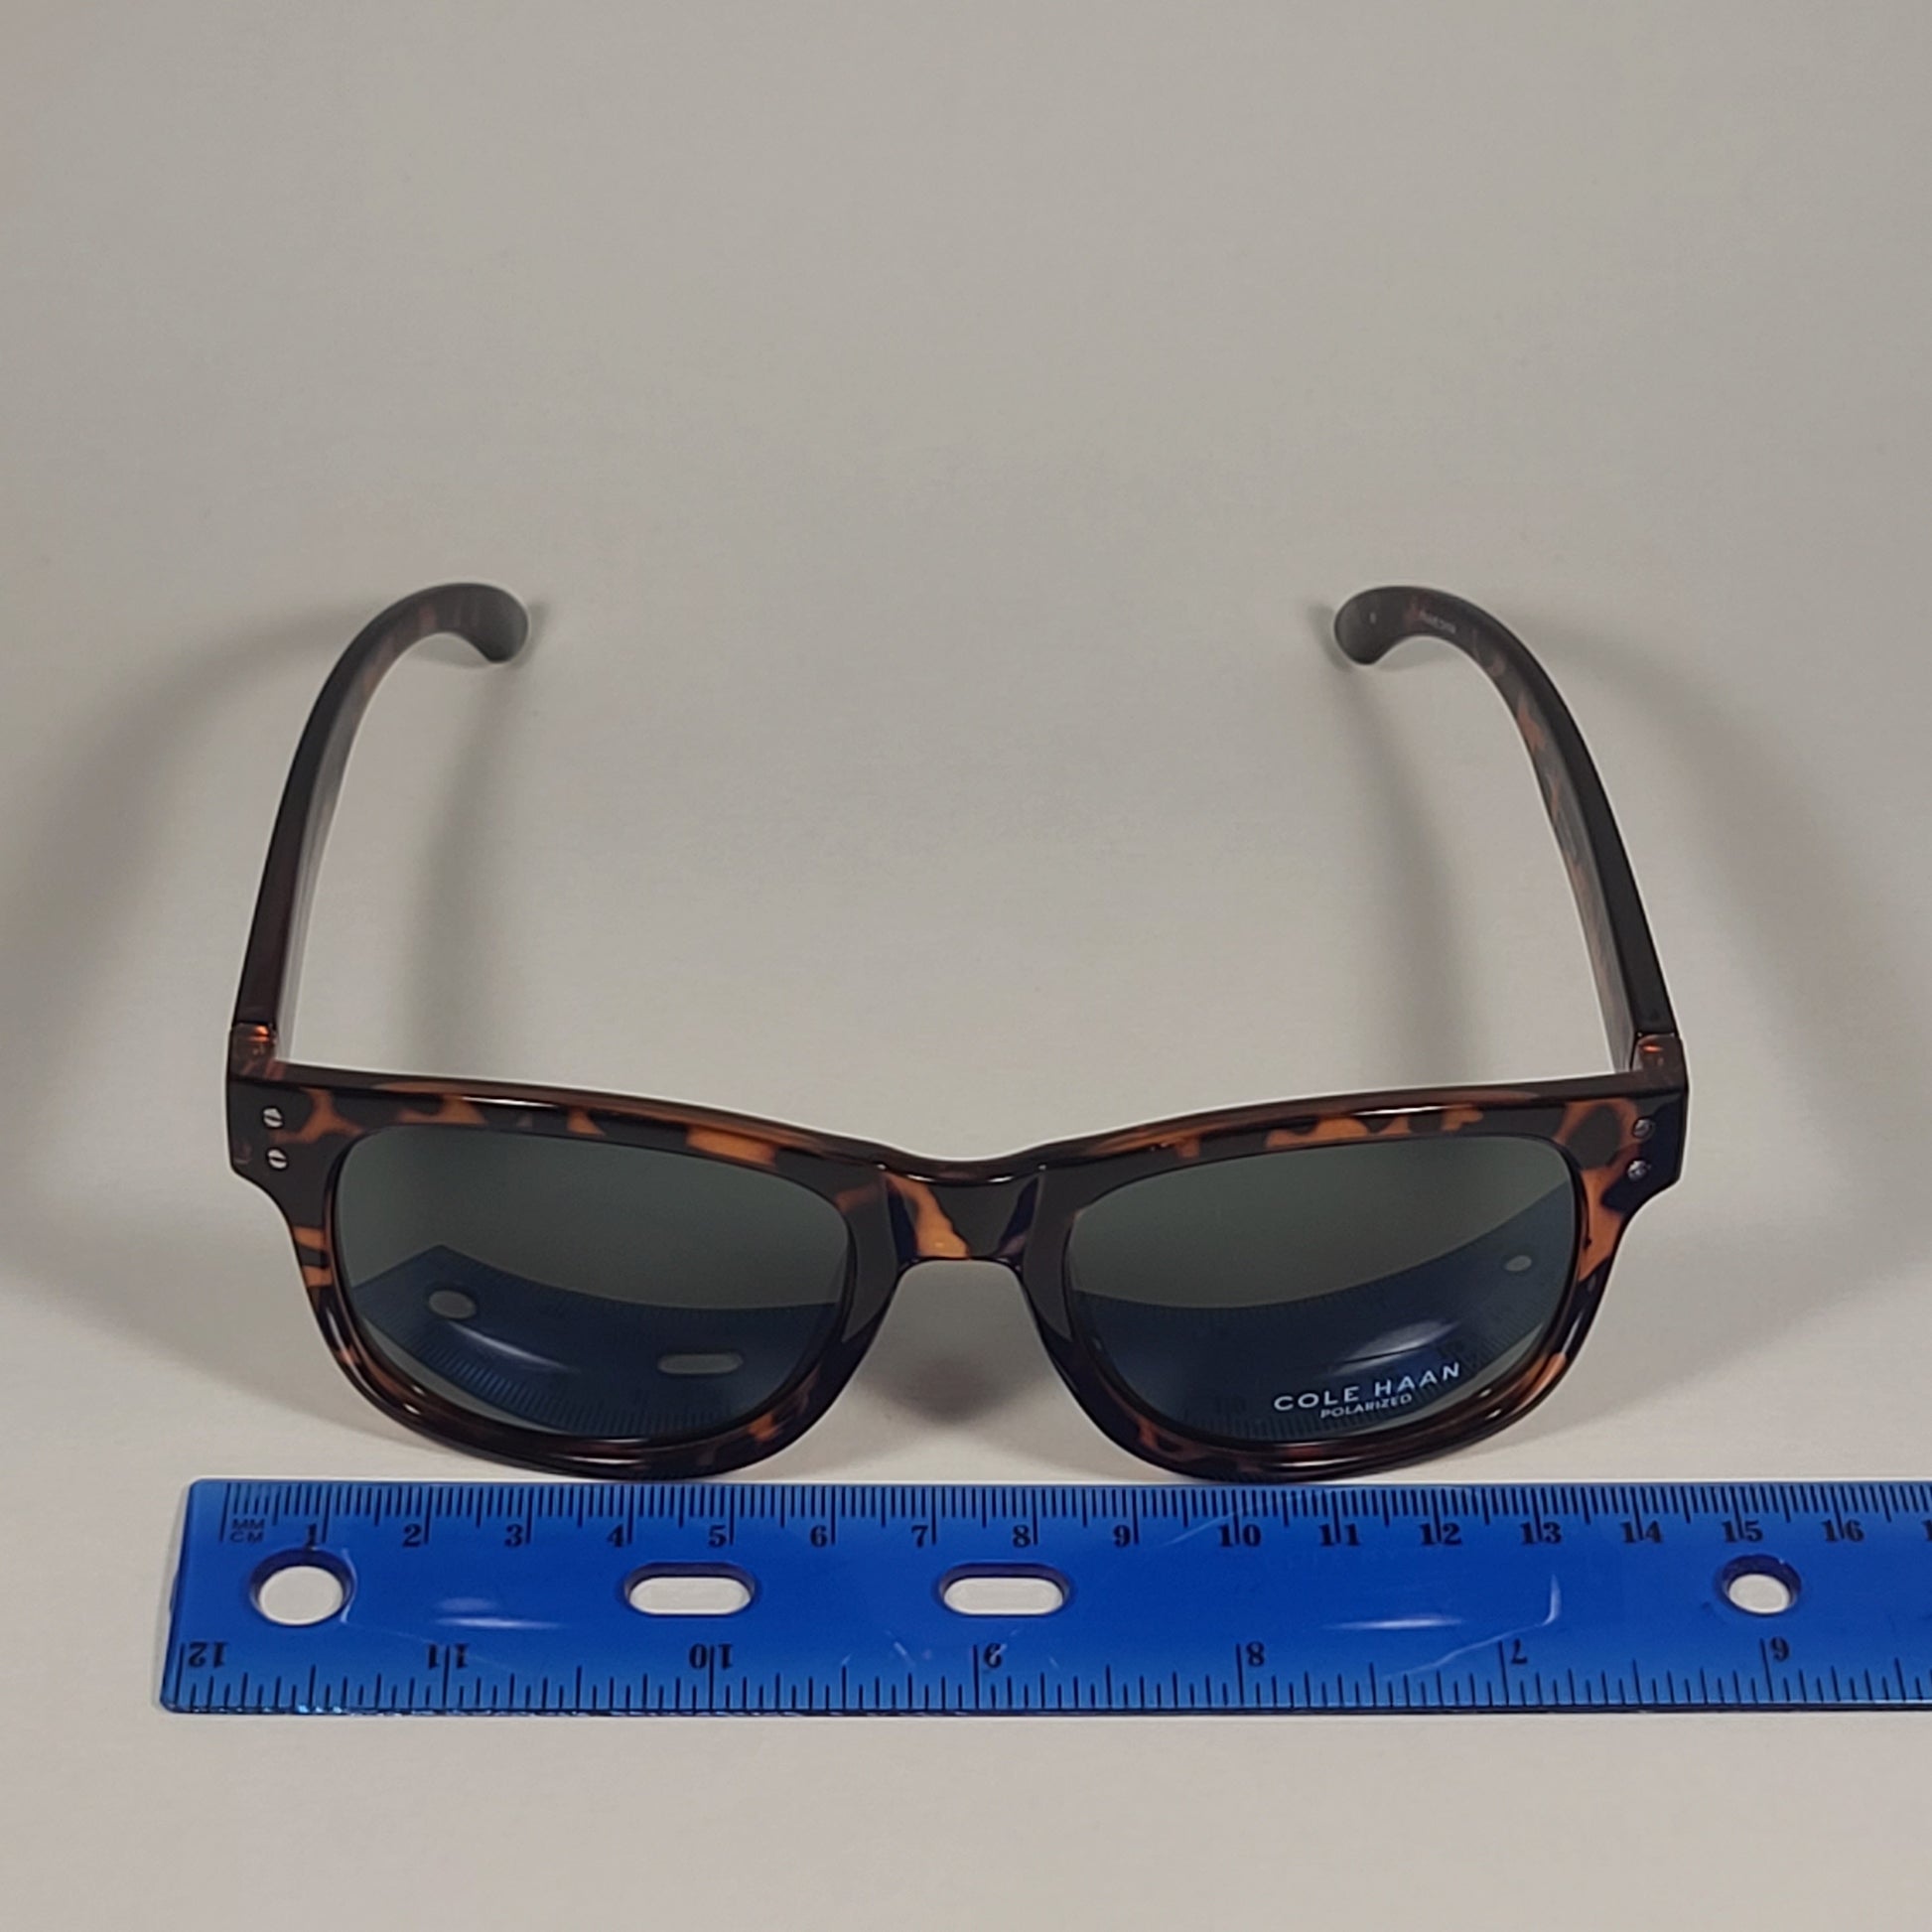 Cole Haan CH8000 215 TORTOISE Polarized Square Sunglasses Brown Tortoise Frame Green Lens - Sunglasses